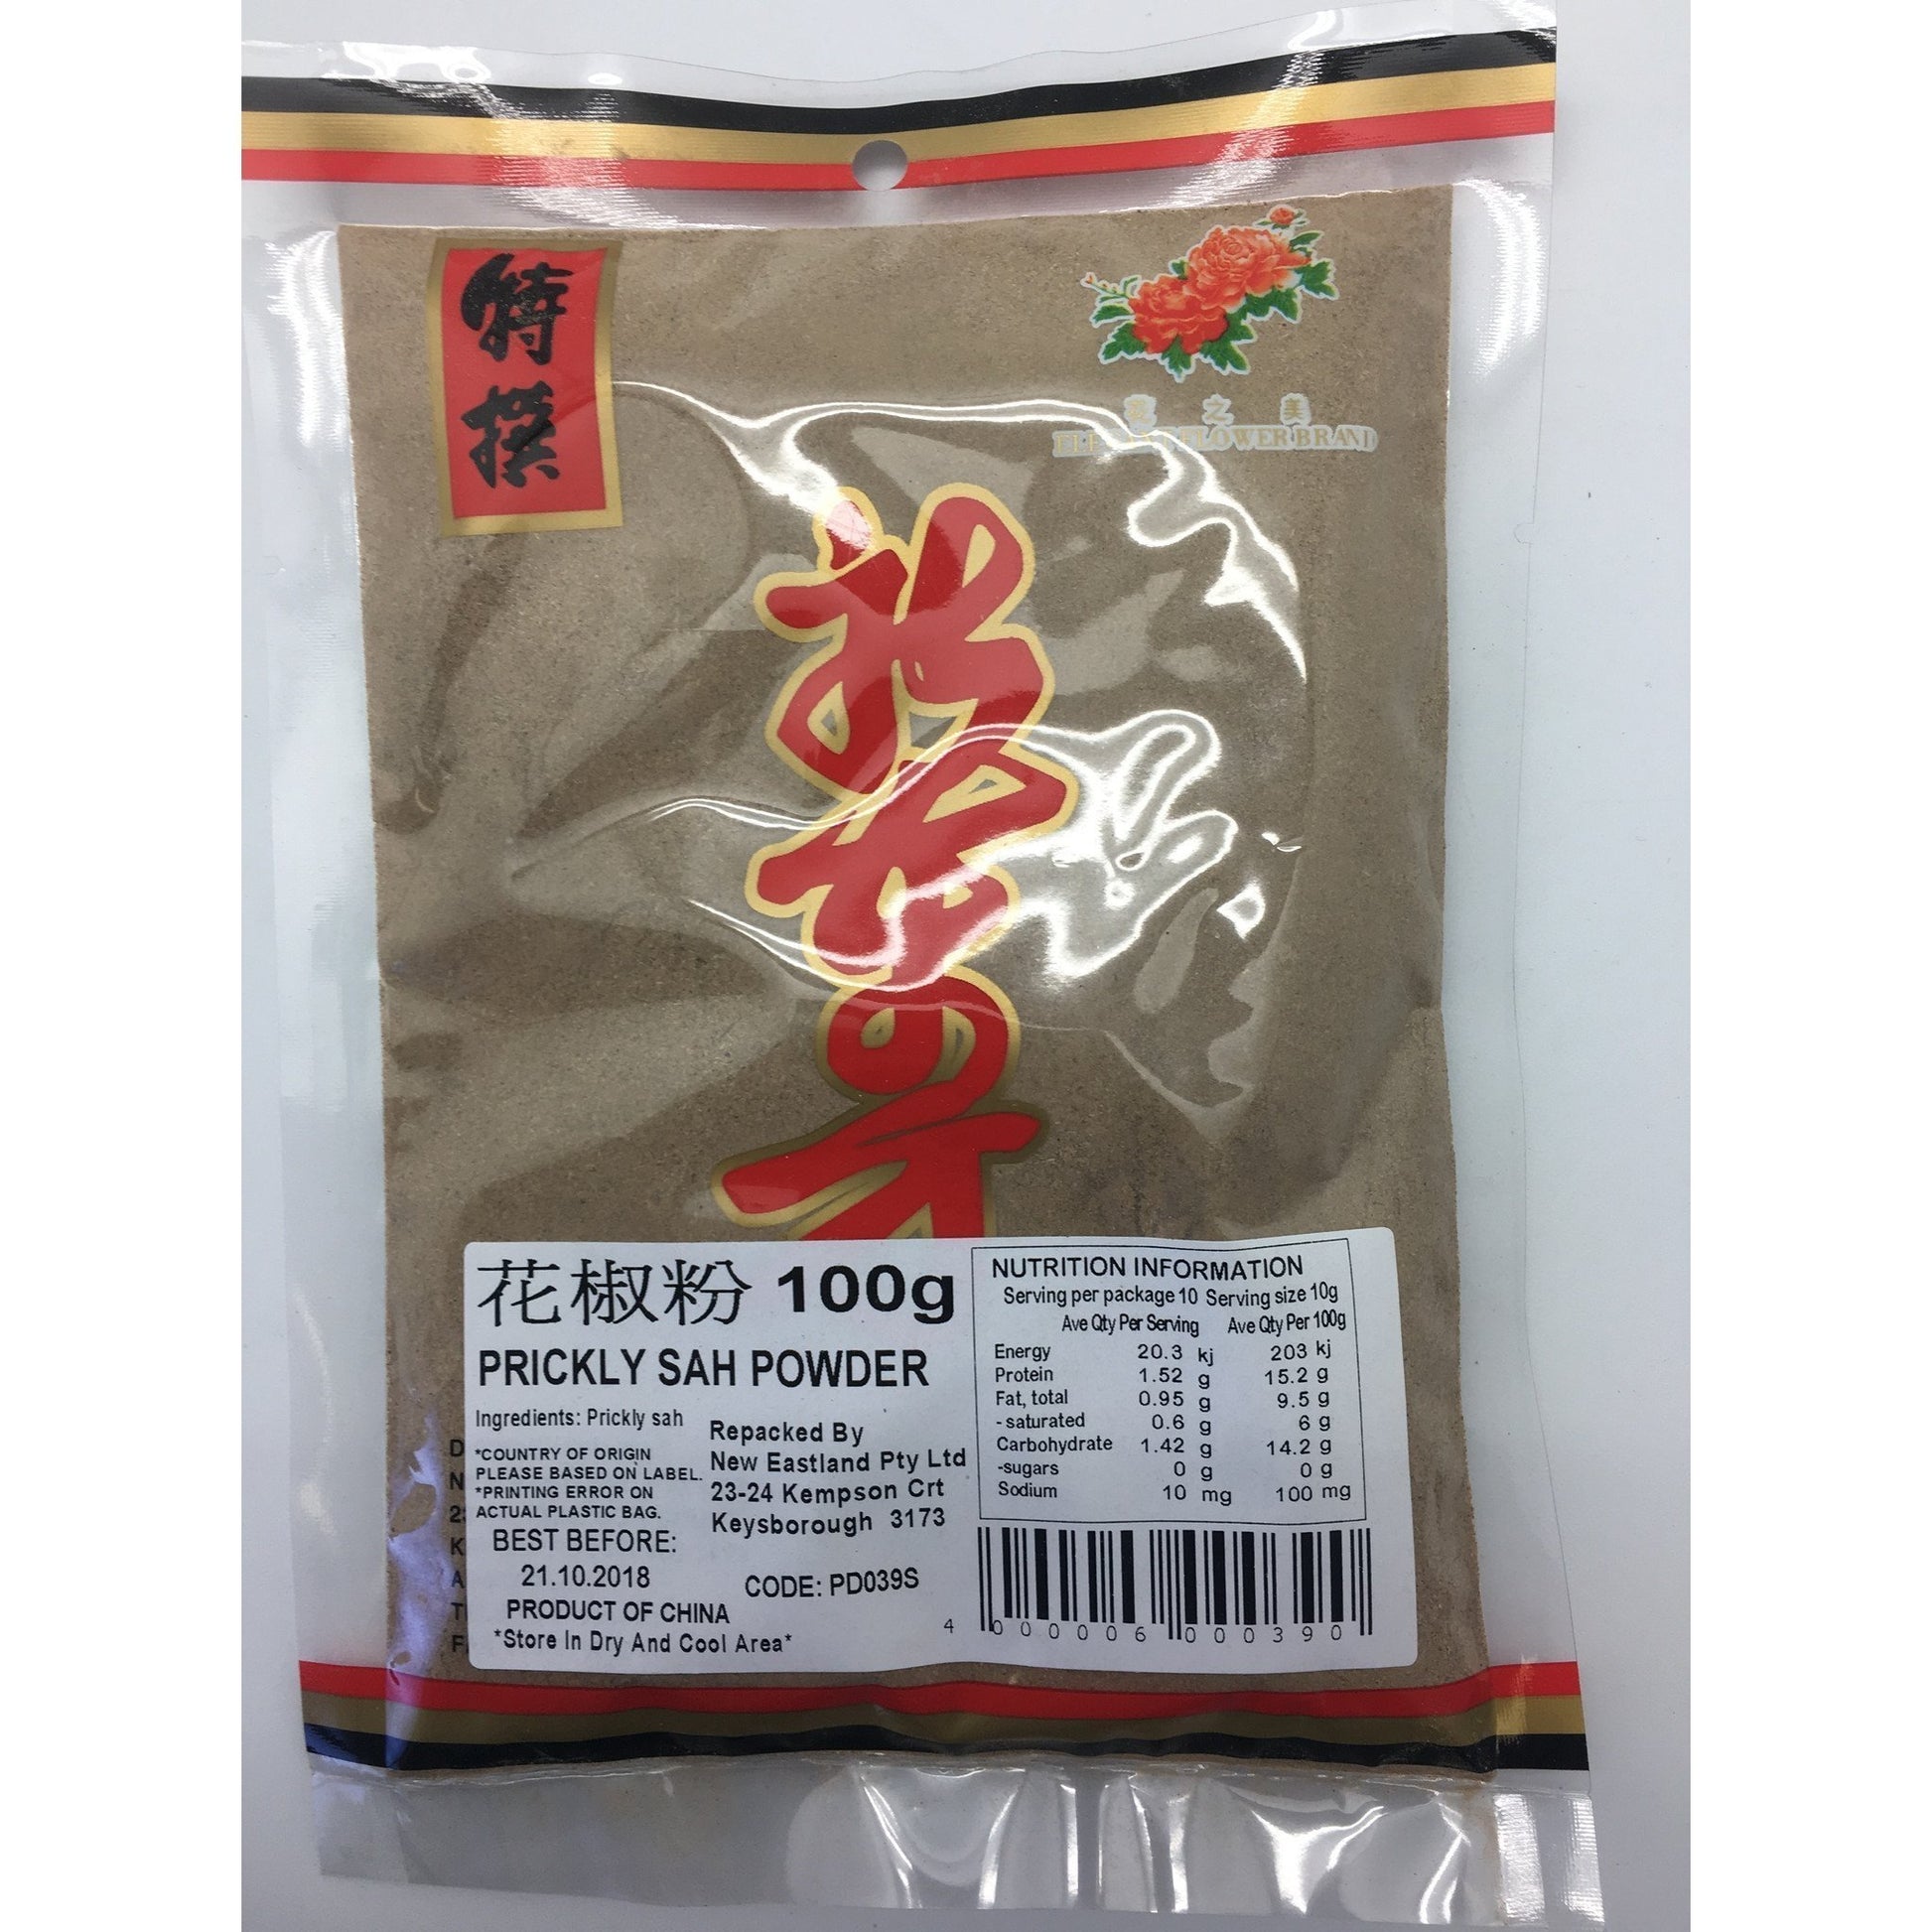 PD039S New Eastland Pty Ltd - Prickly Sah Powder 100g - 10 packets / 1 Bag - New Eastland Pty Ltd - Asian food wholesalers